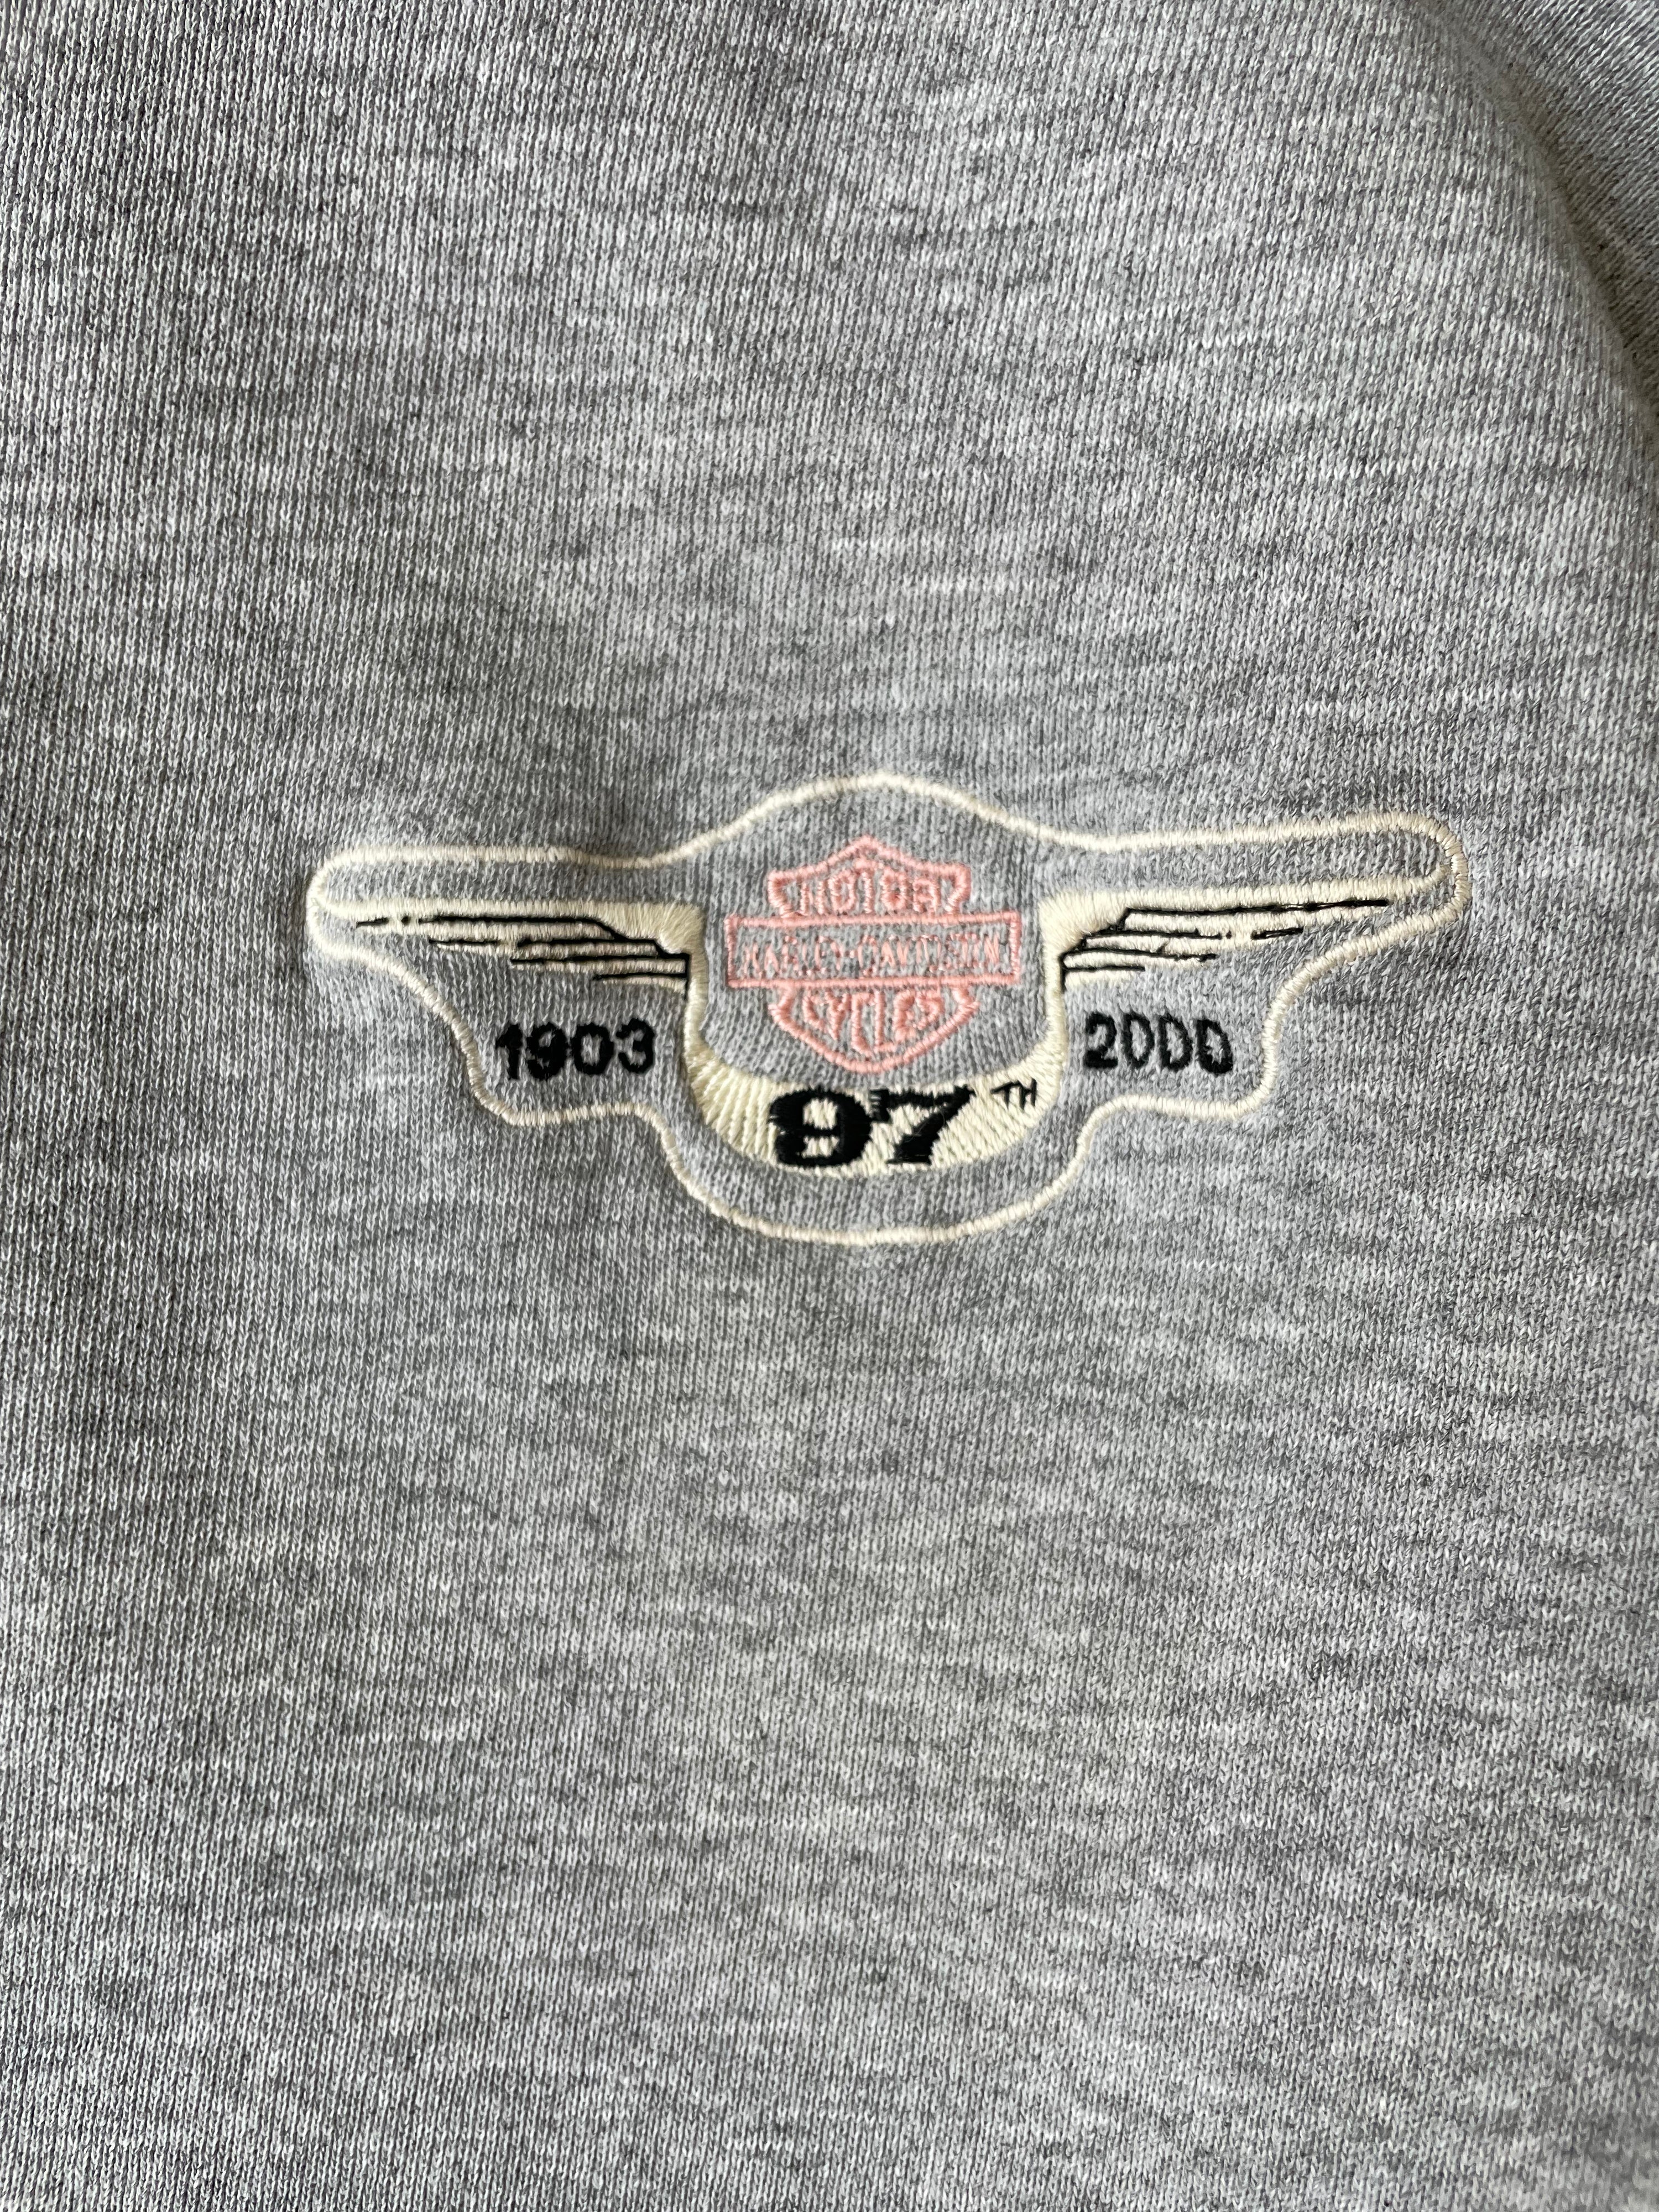 2000 Harley Davidson Quarter Zip Sweatshirt - XL